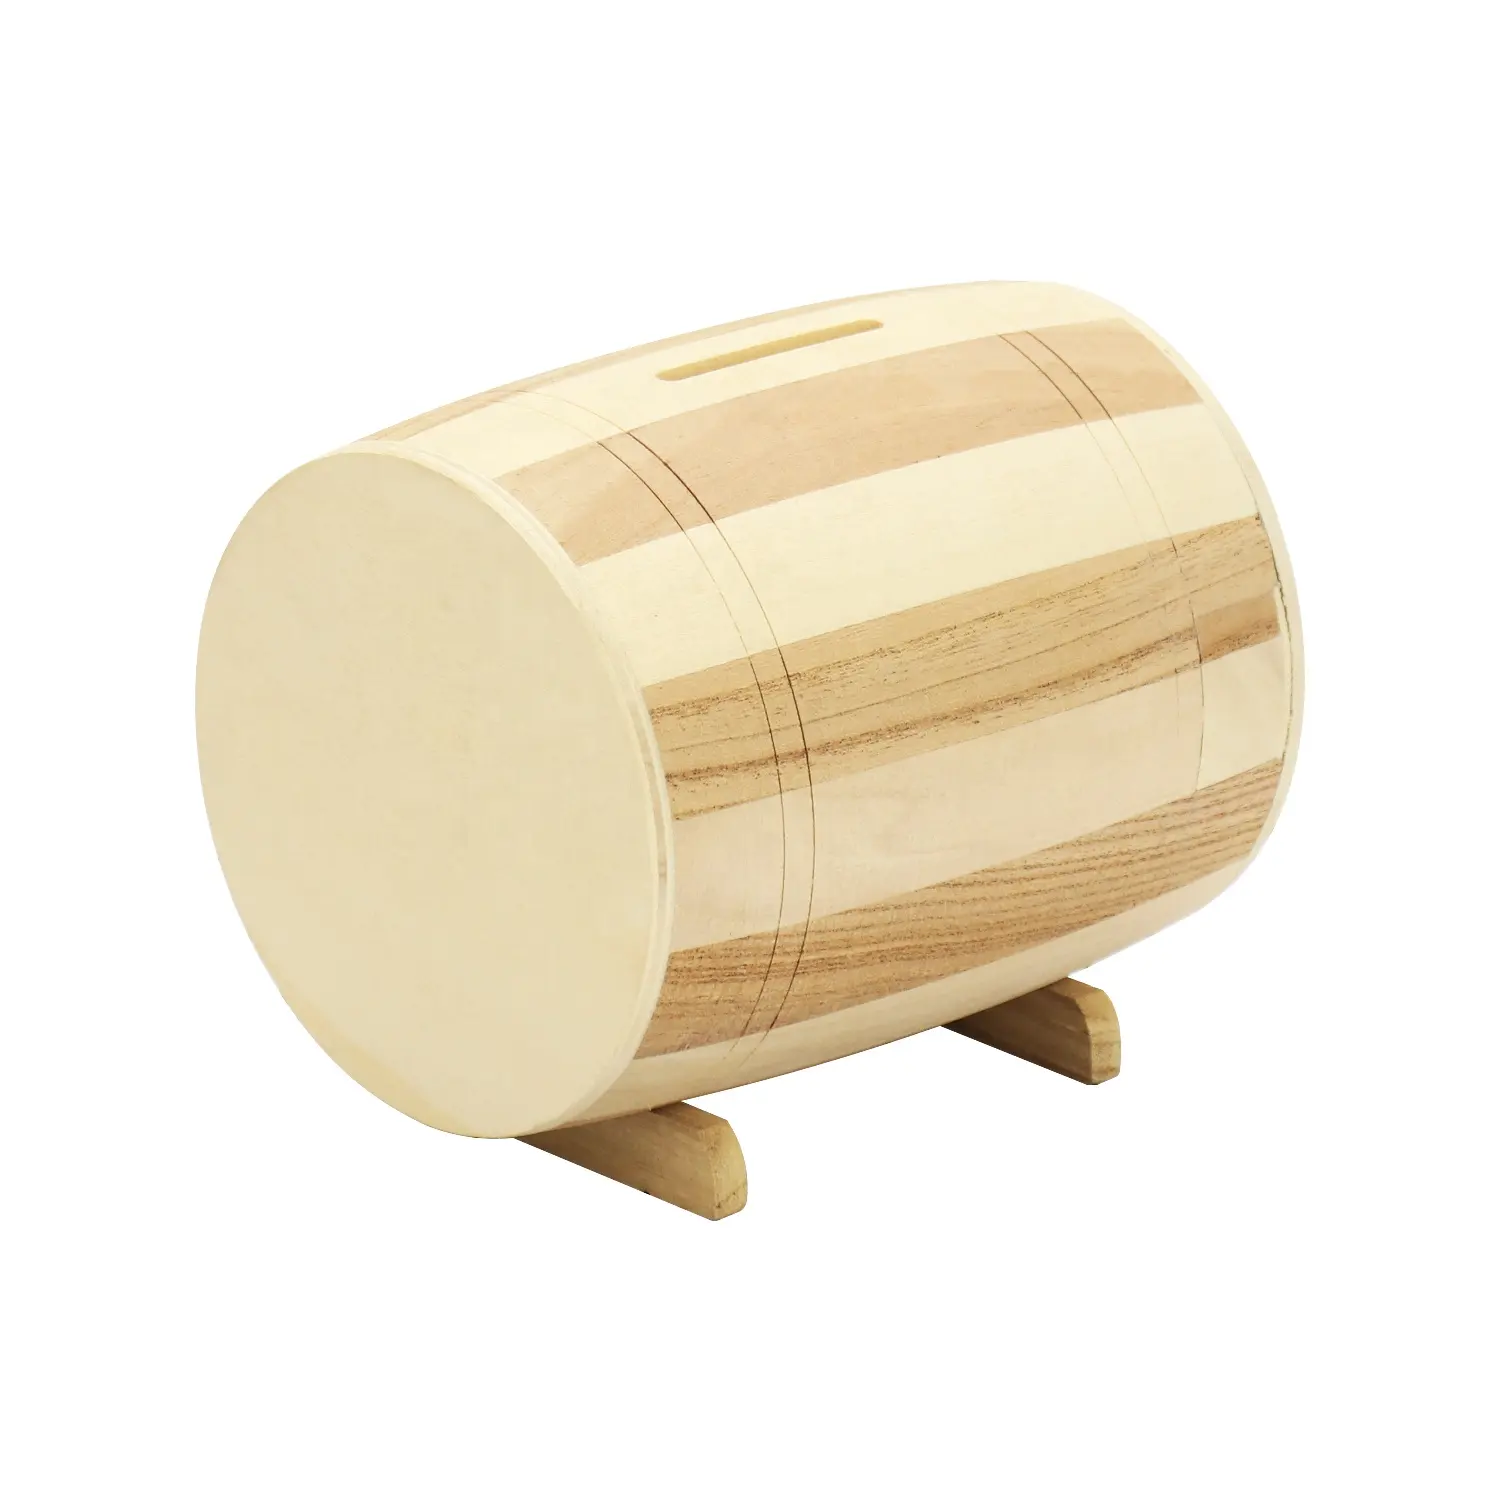 Wholesale custom barrel shapes creative wooden treasure chest Coin box money box